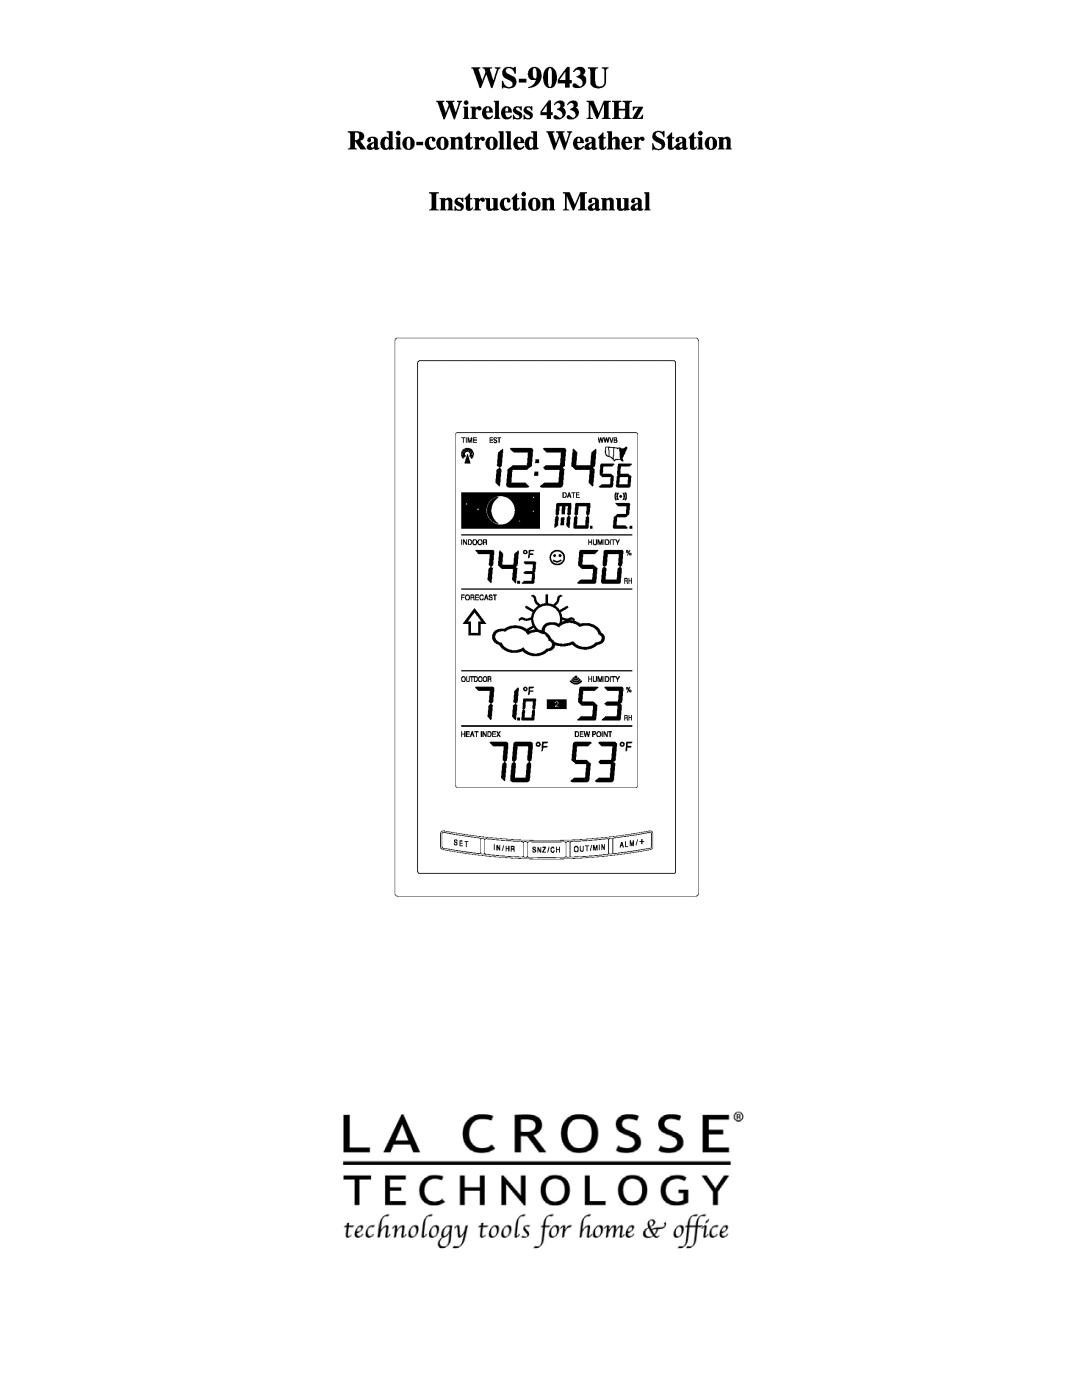 La Crosse Technology WS-9043U instruction manual Wireless 433 MHz Radio-controlledWeather Station 